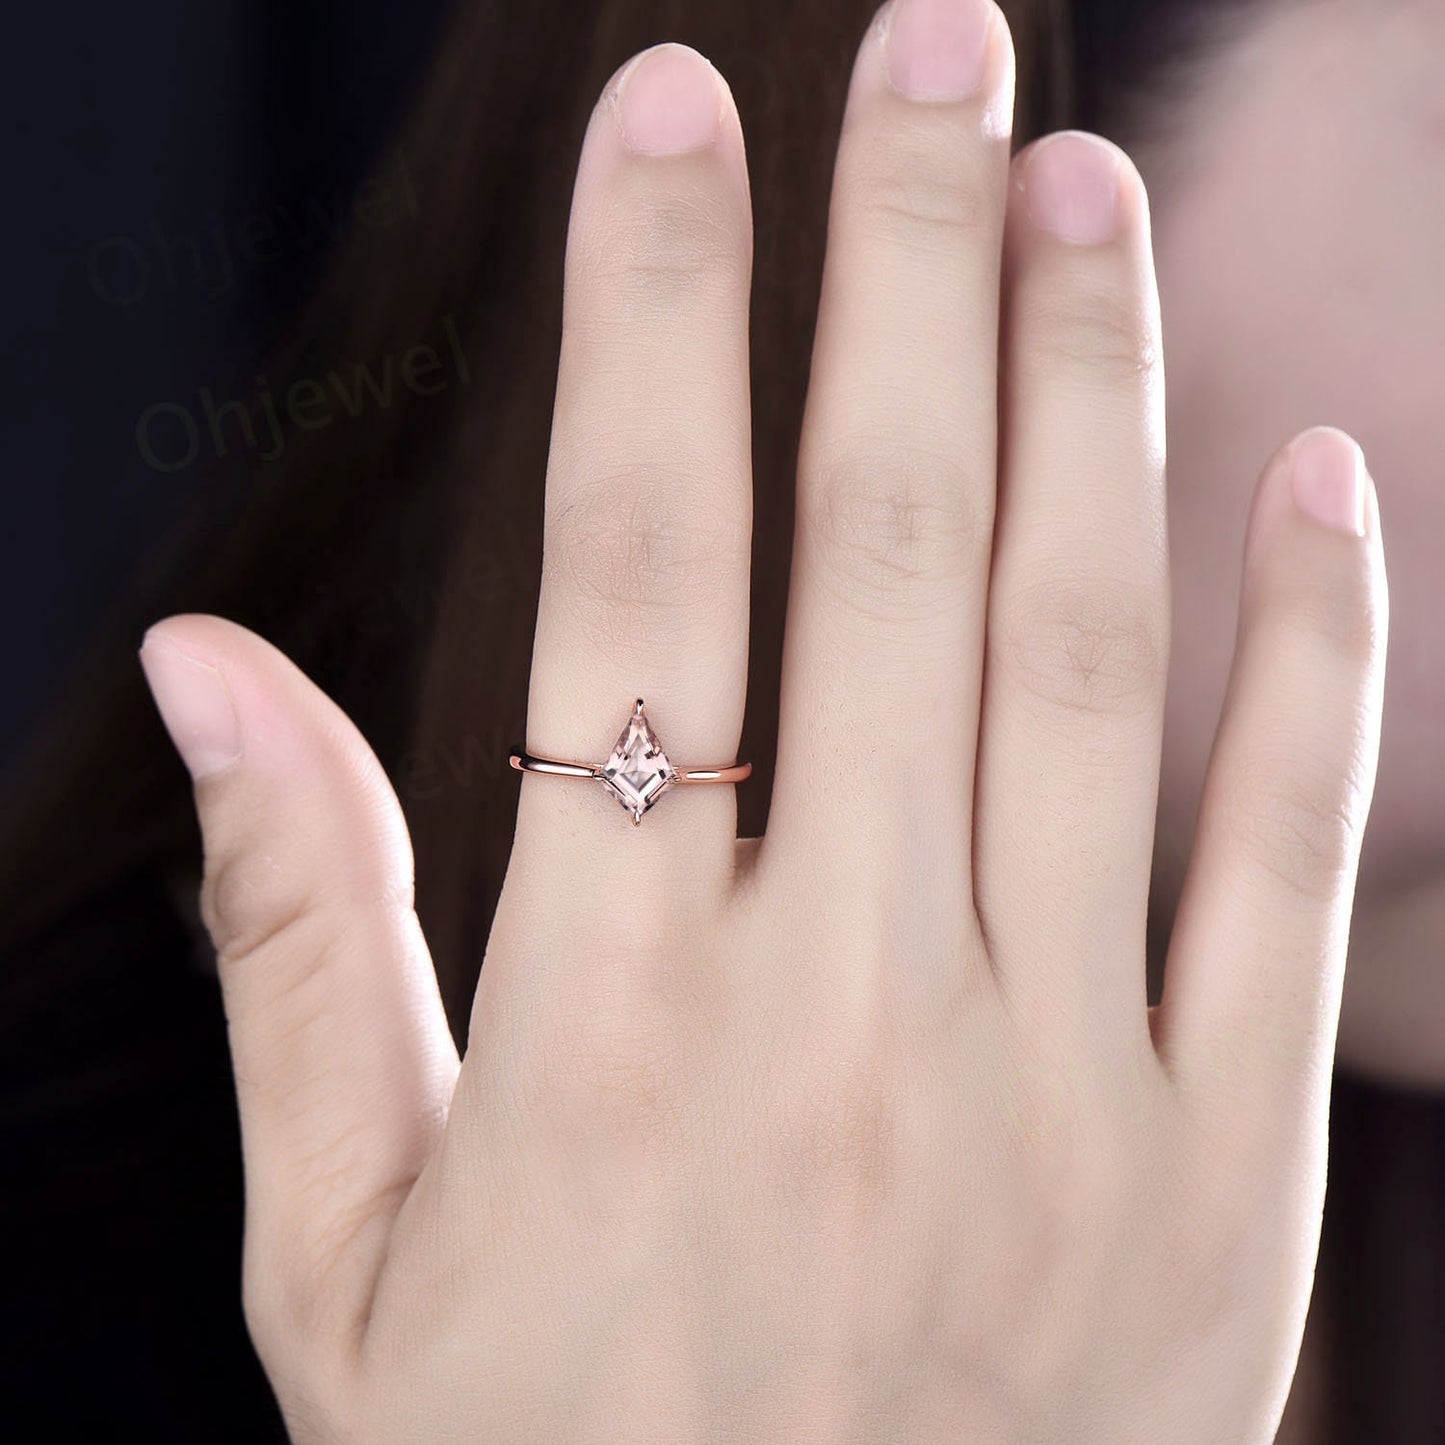 1ct kite cut pink morganite ring rose gold unique solitaire engagement ring set vintage style diamond wedding ring band women bridal set